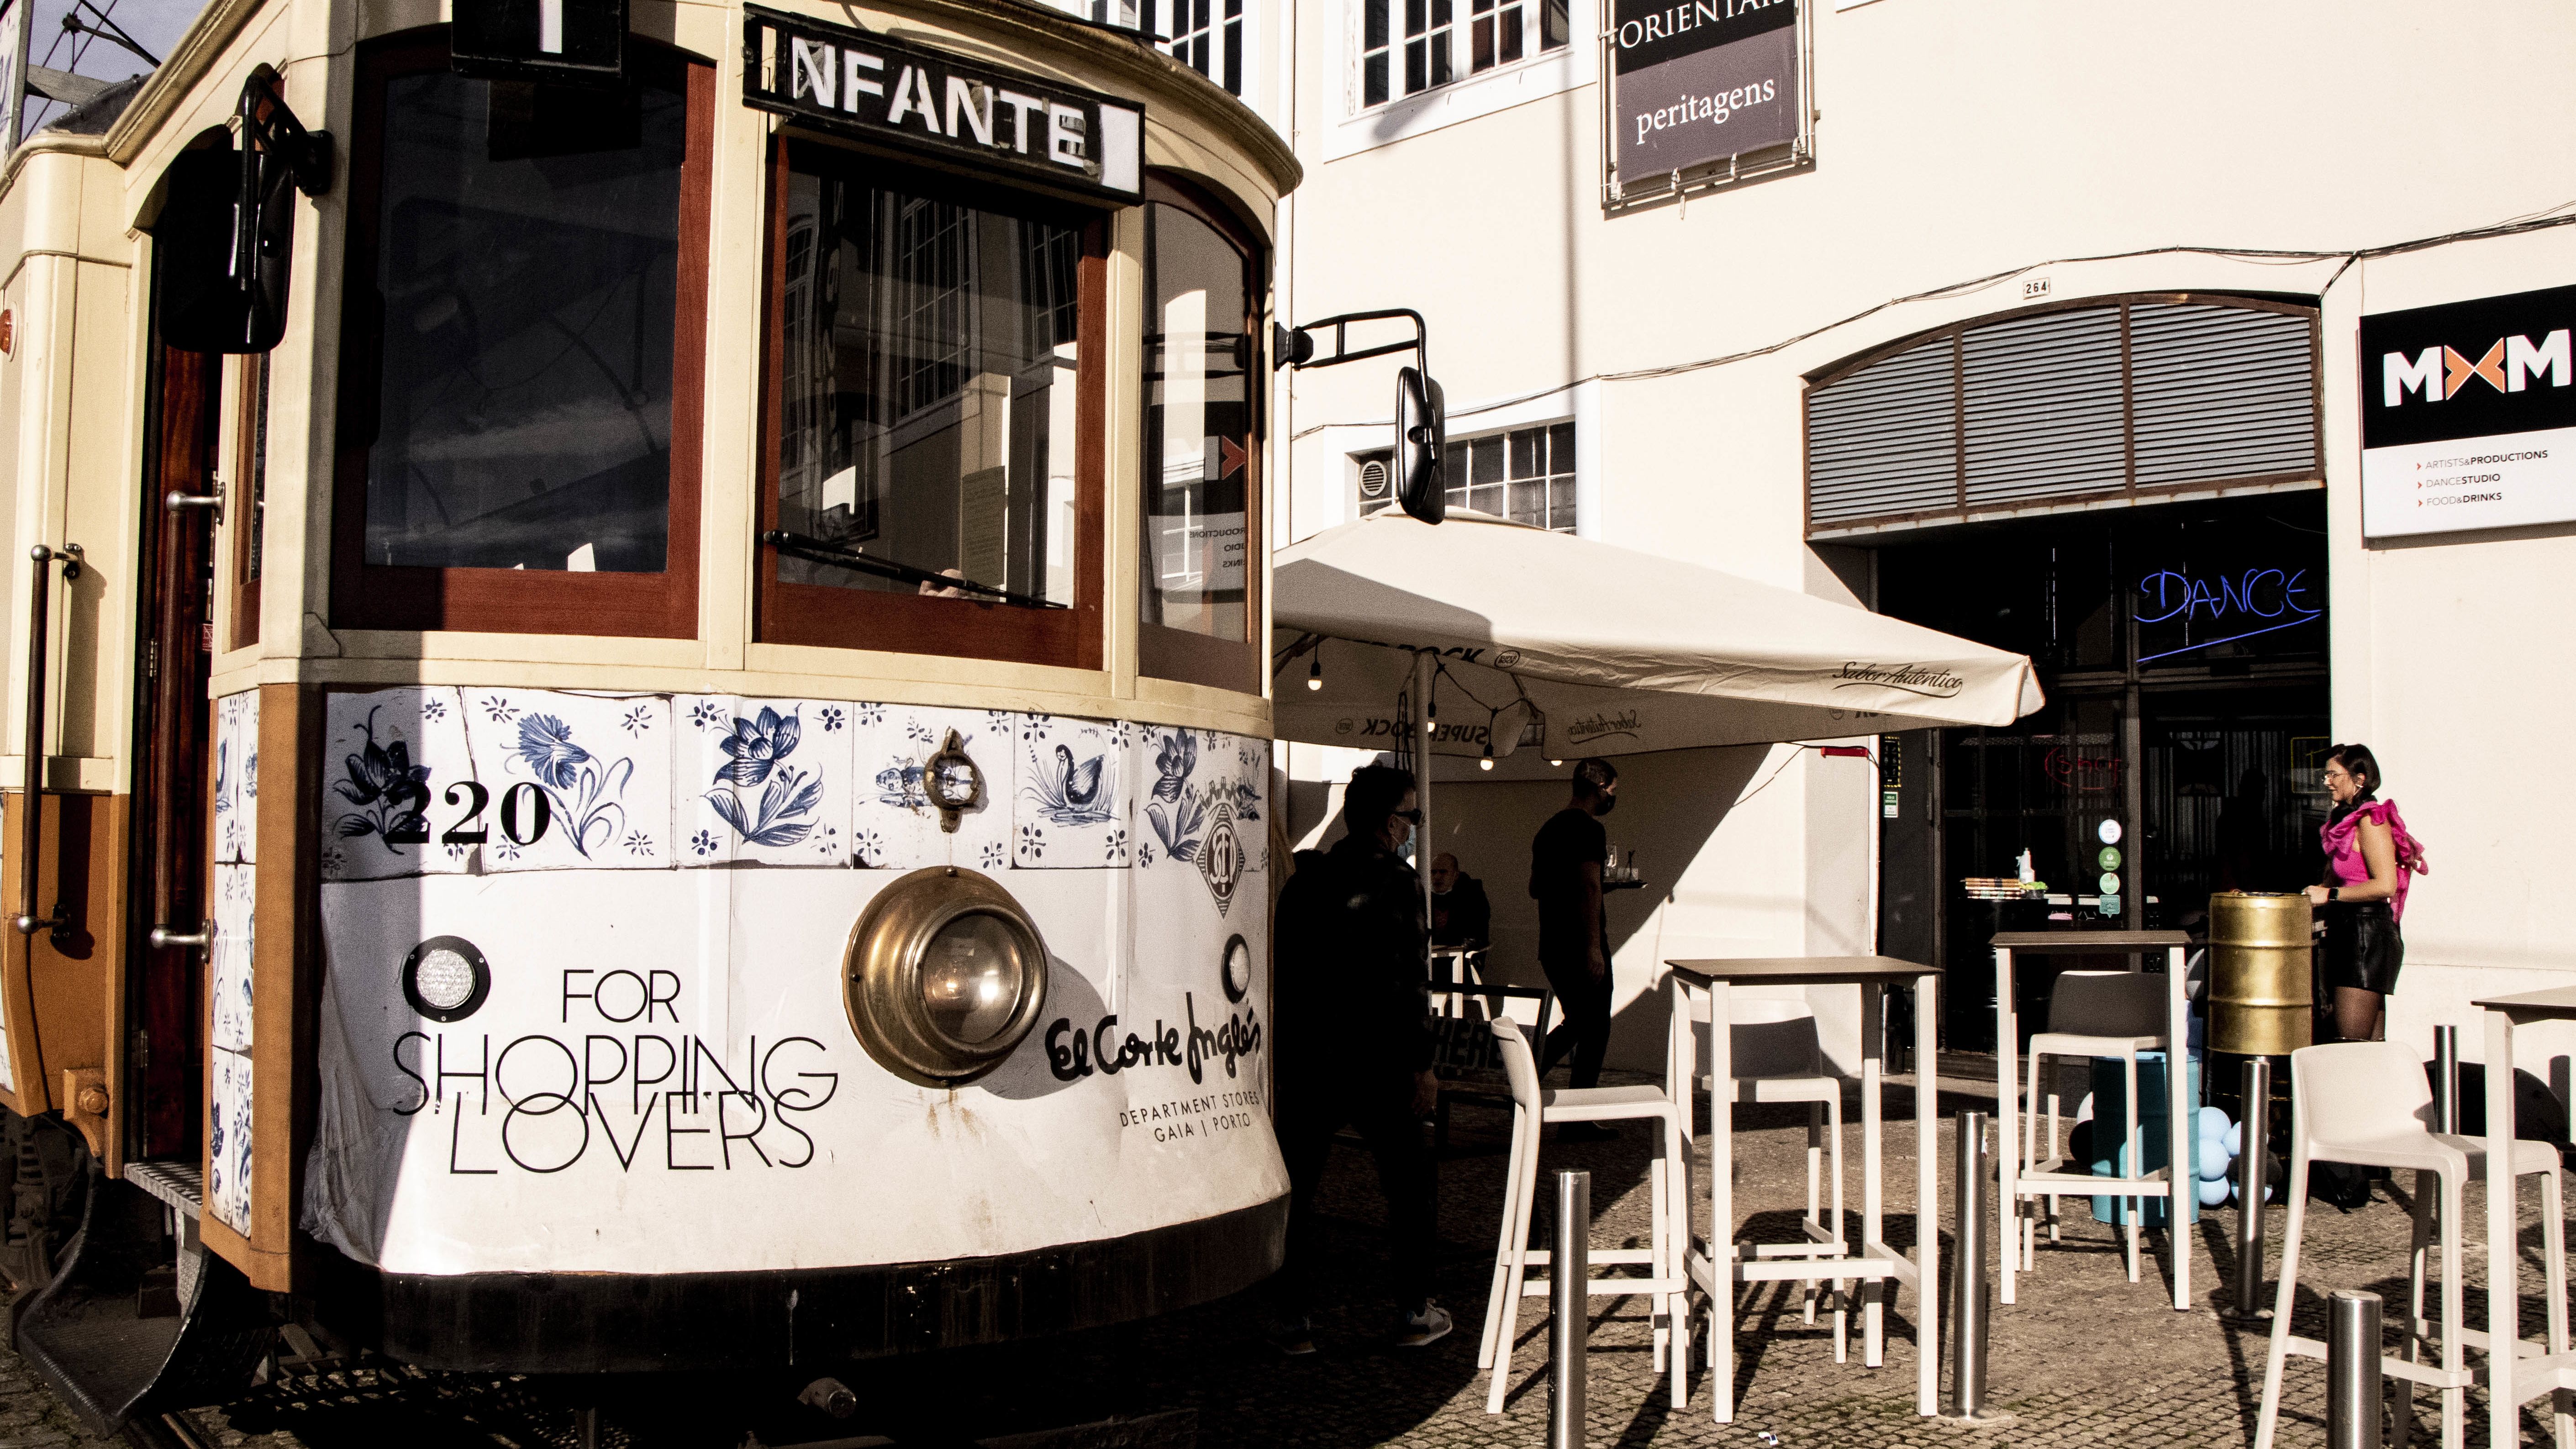 MXM Food & Drinks, Porto